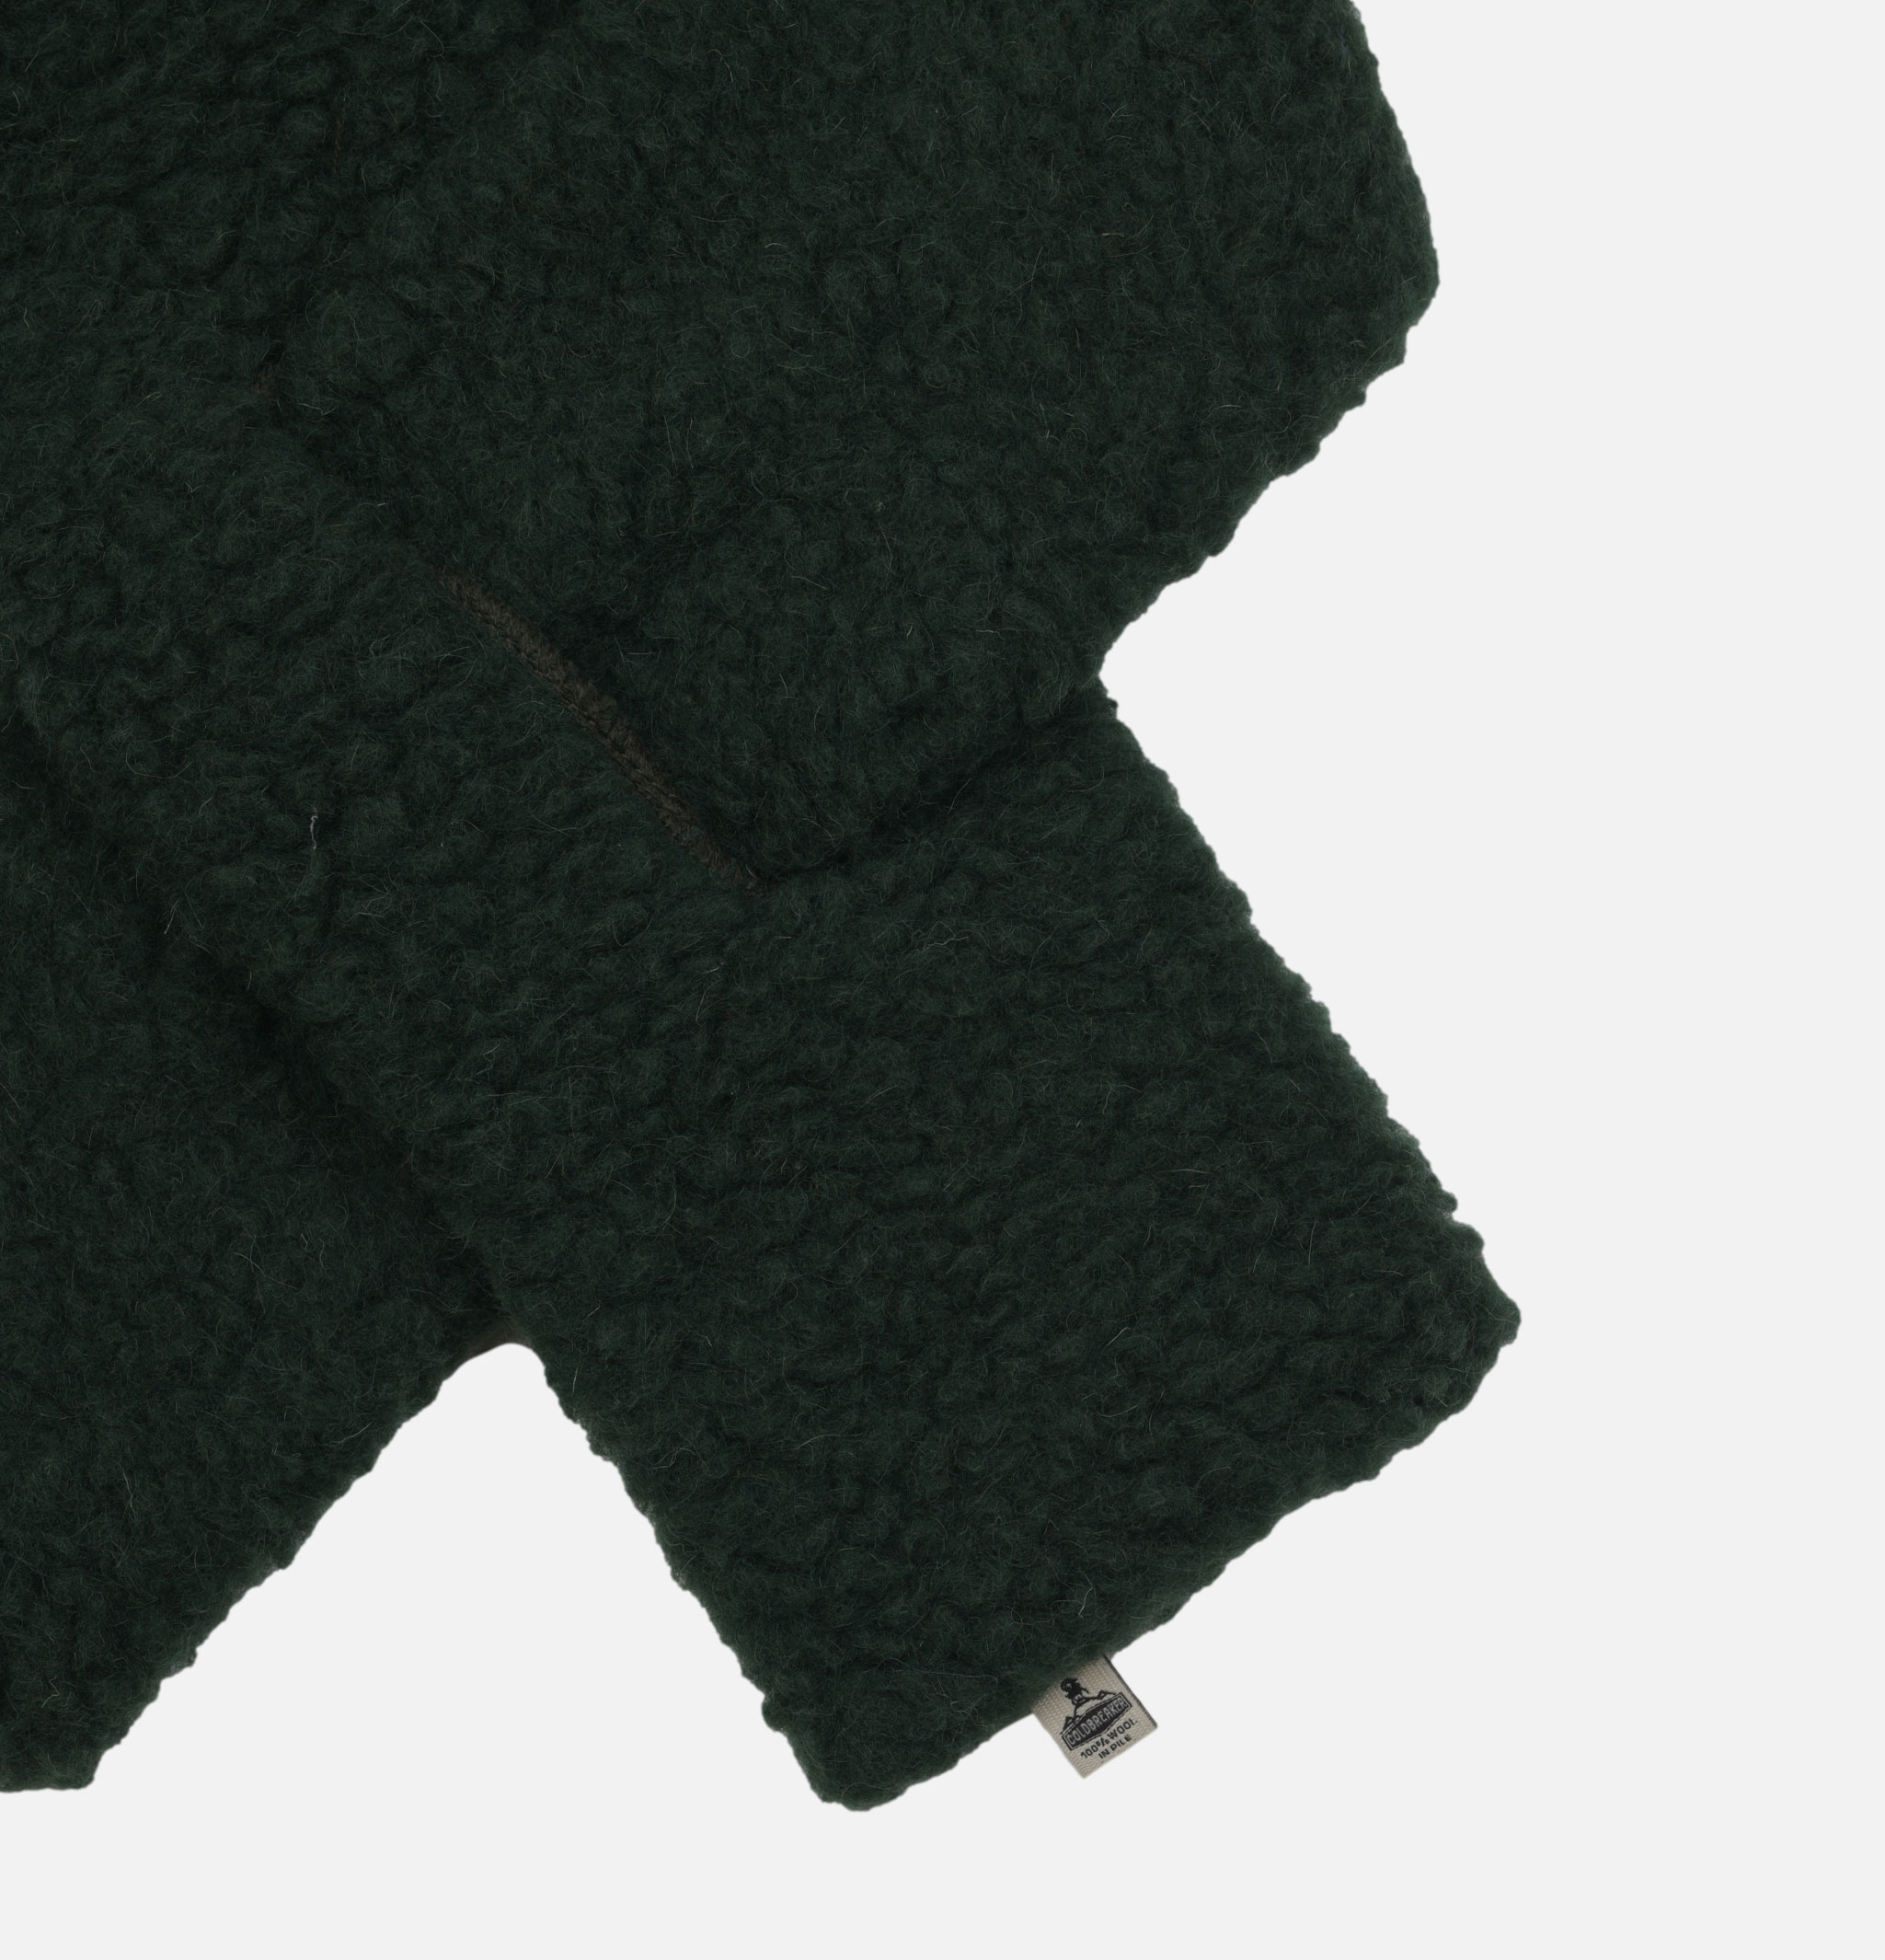 Coldbreaker tubular scarf in Dark Green.